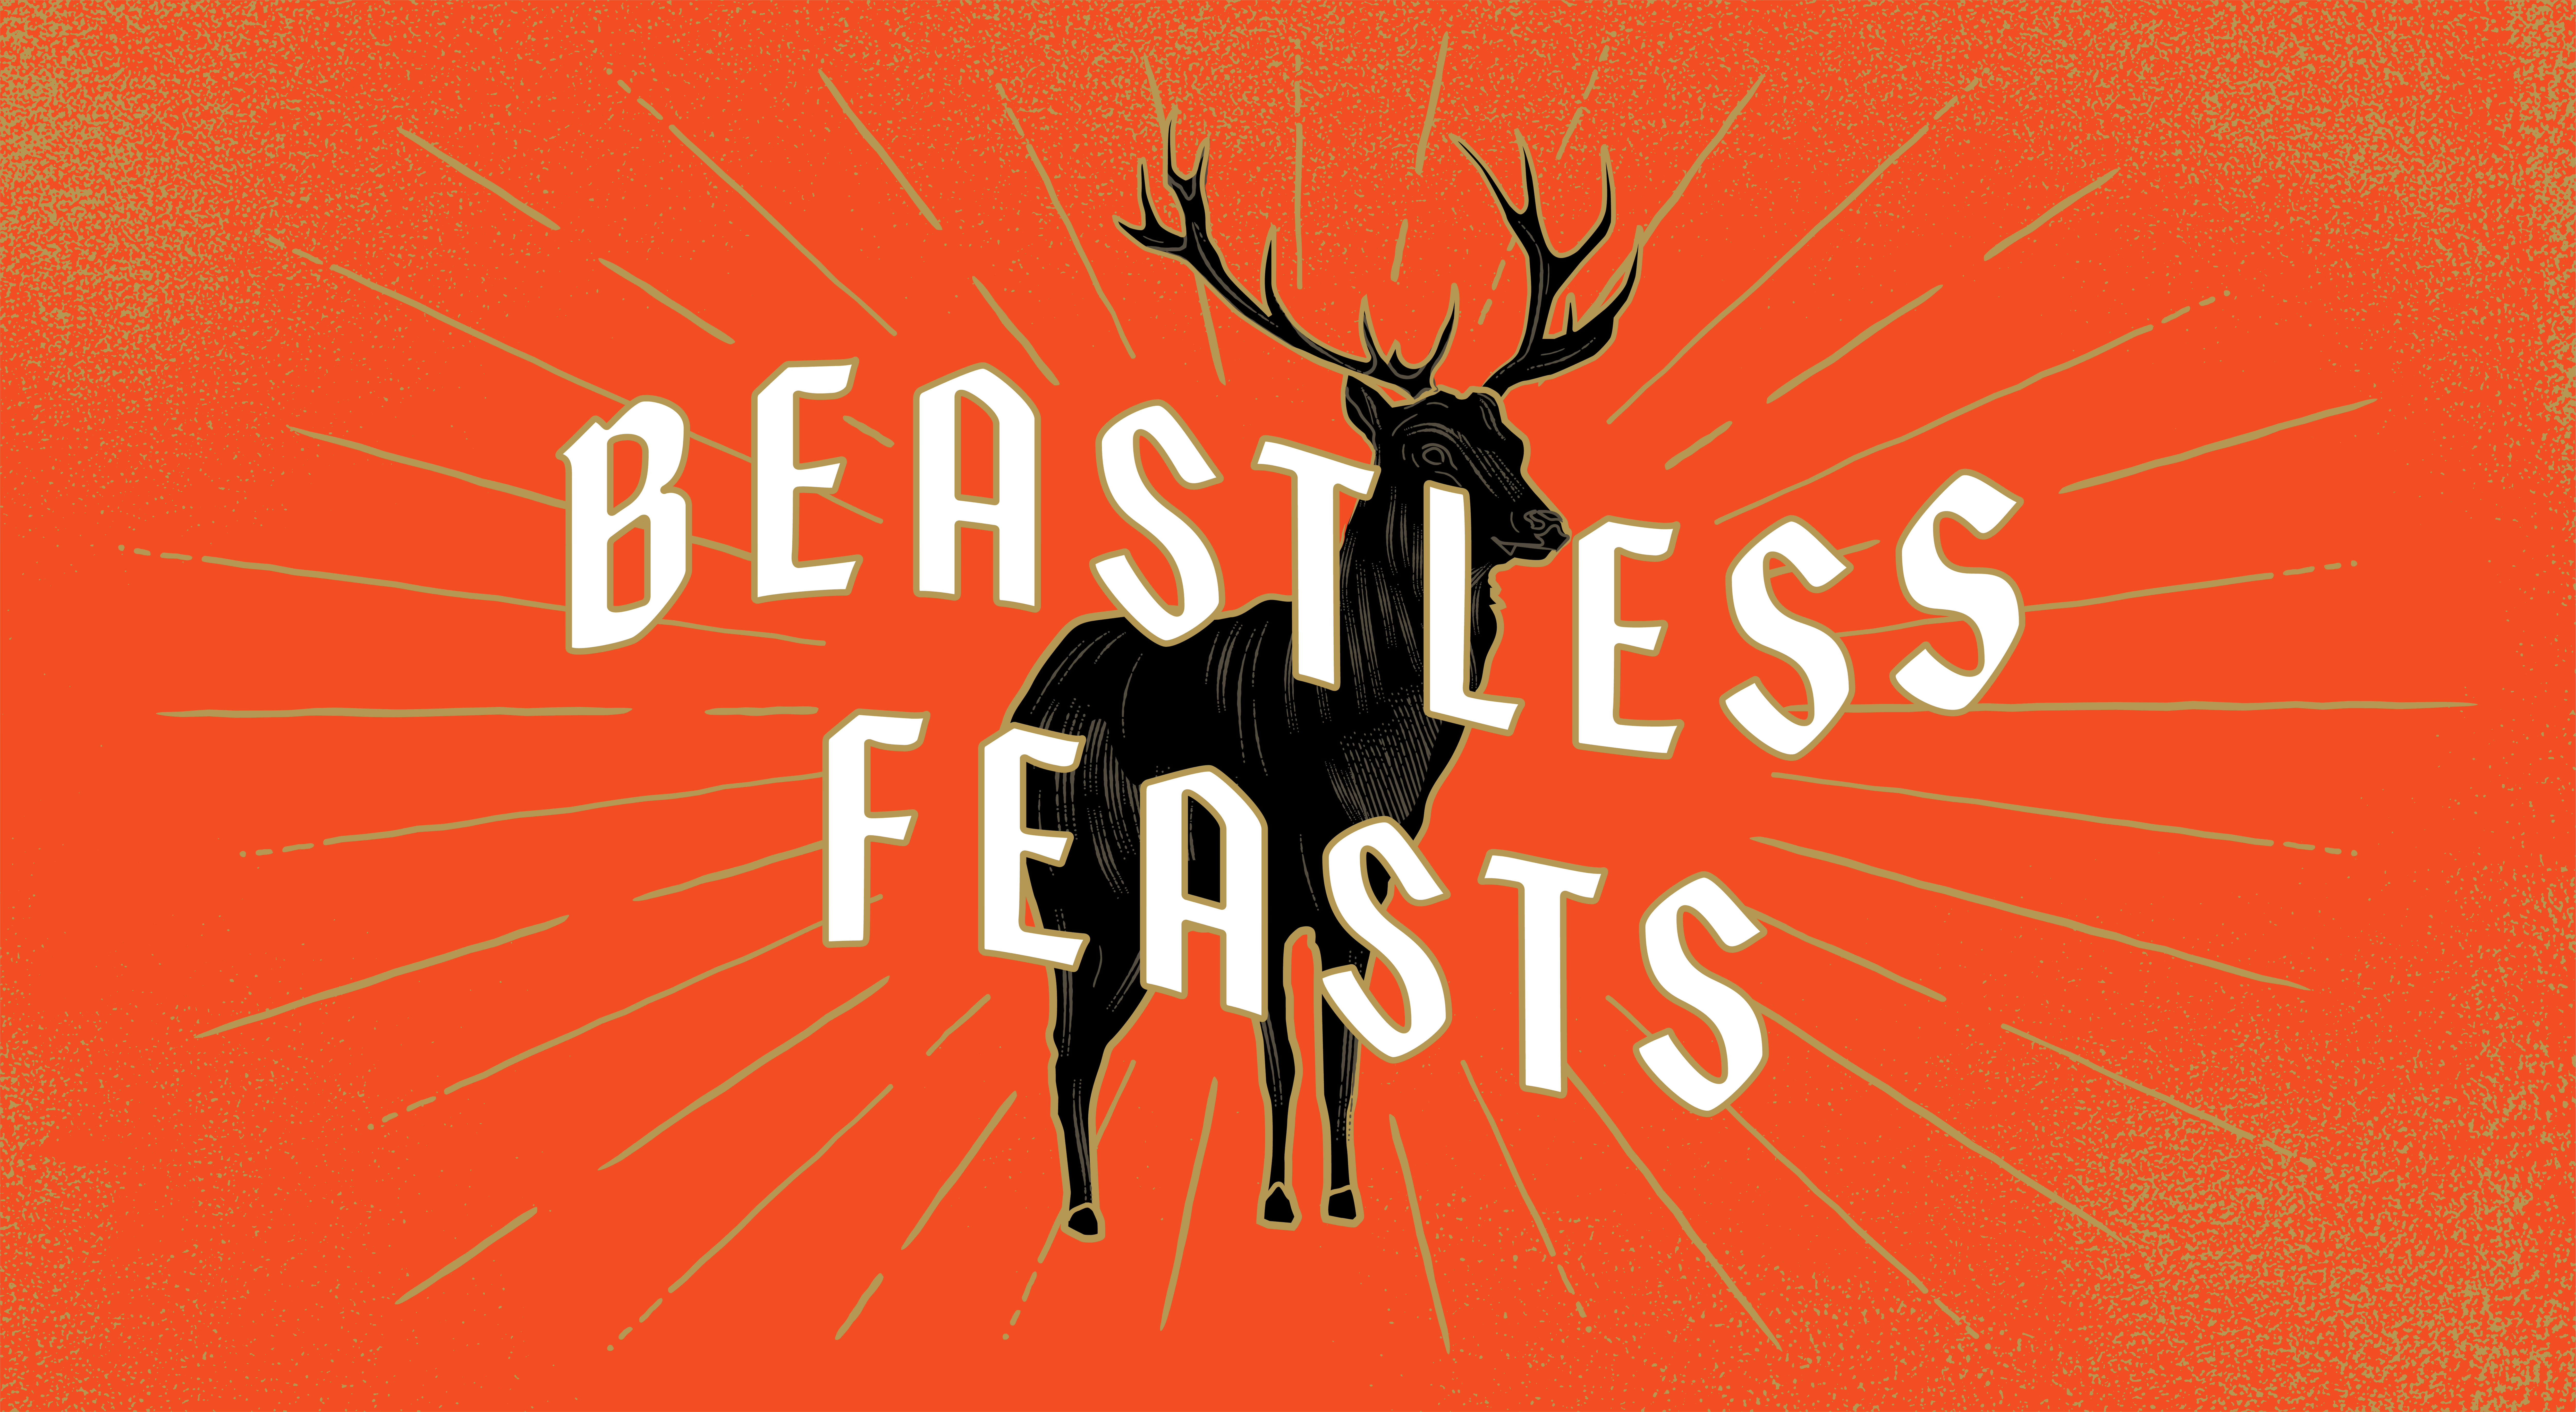 Beastless Feast